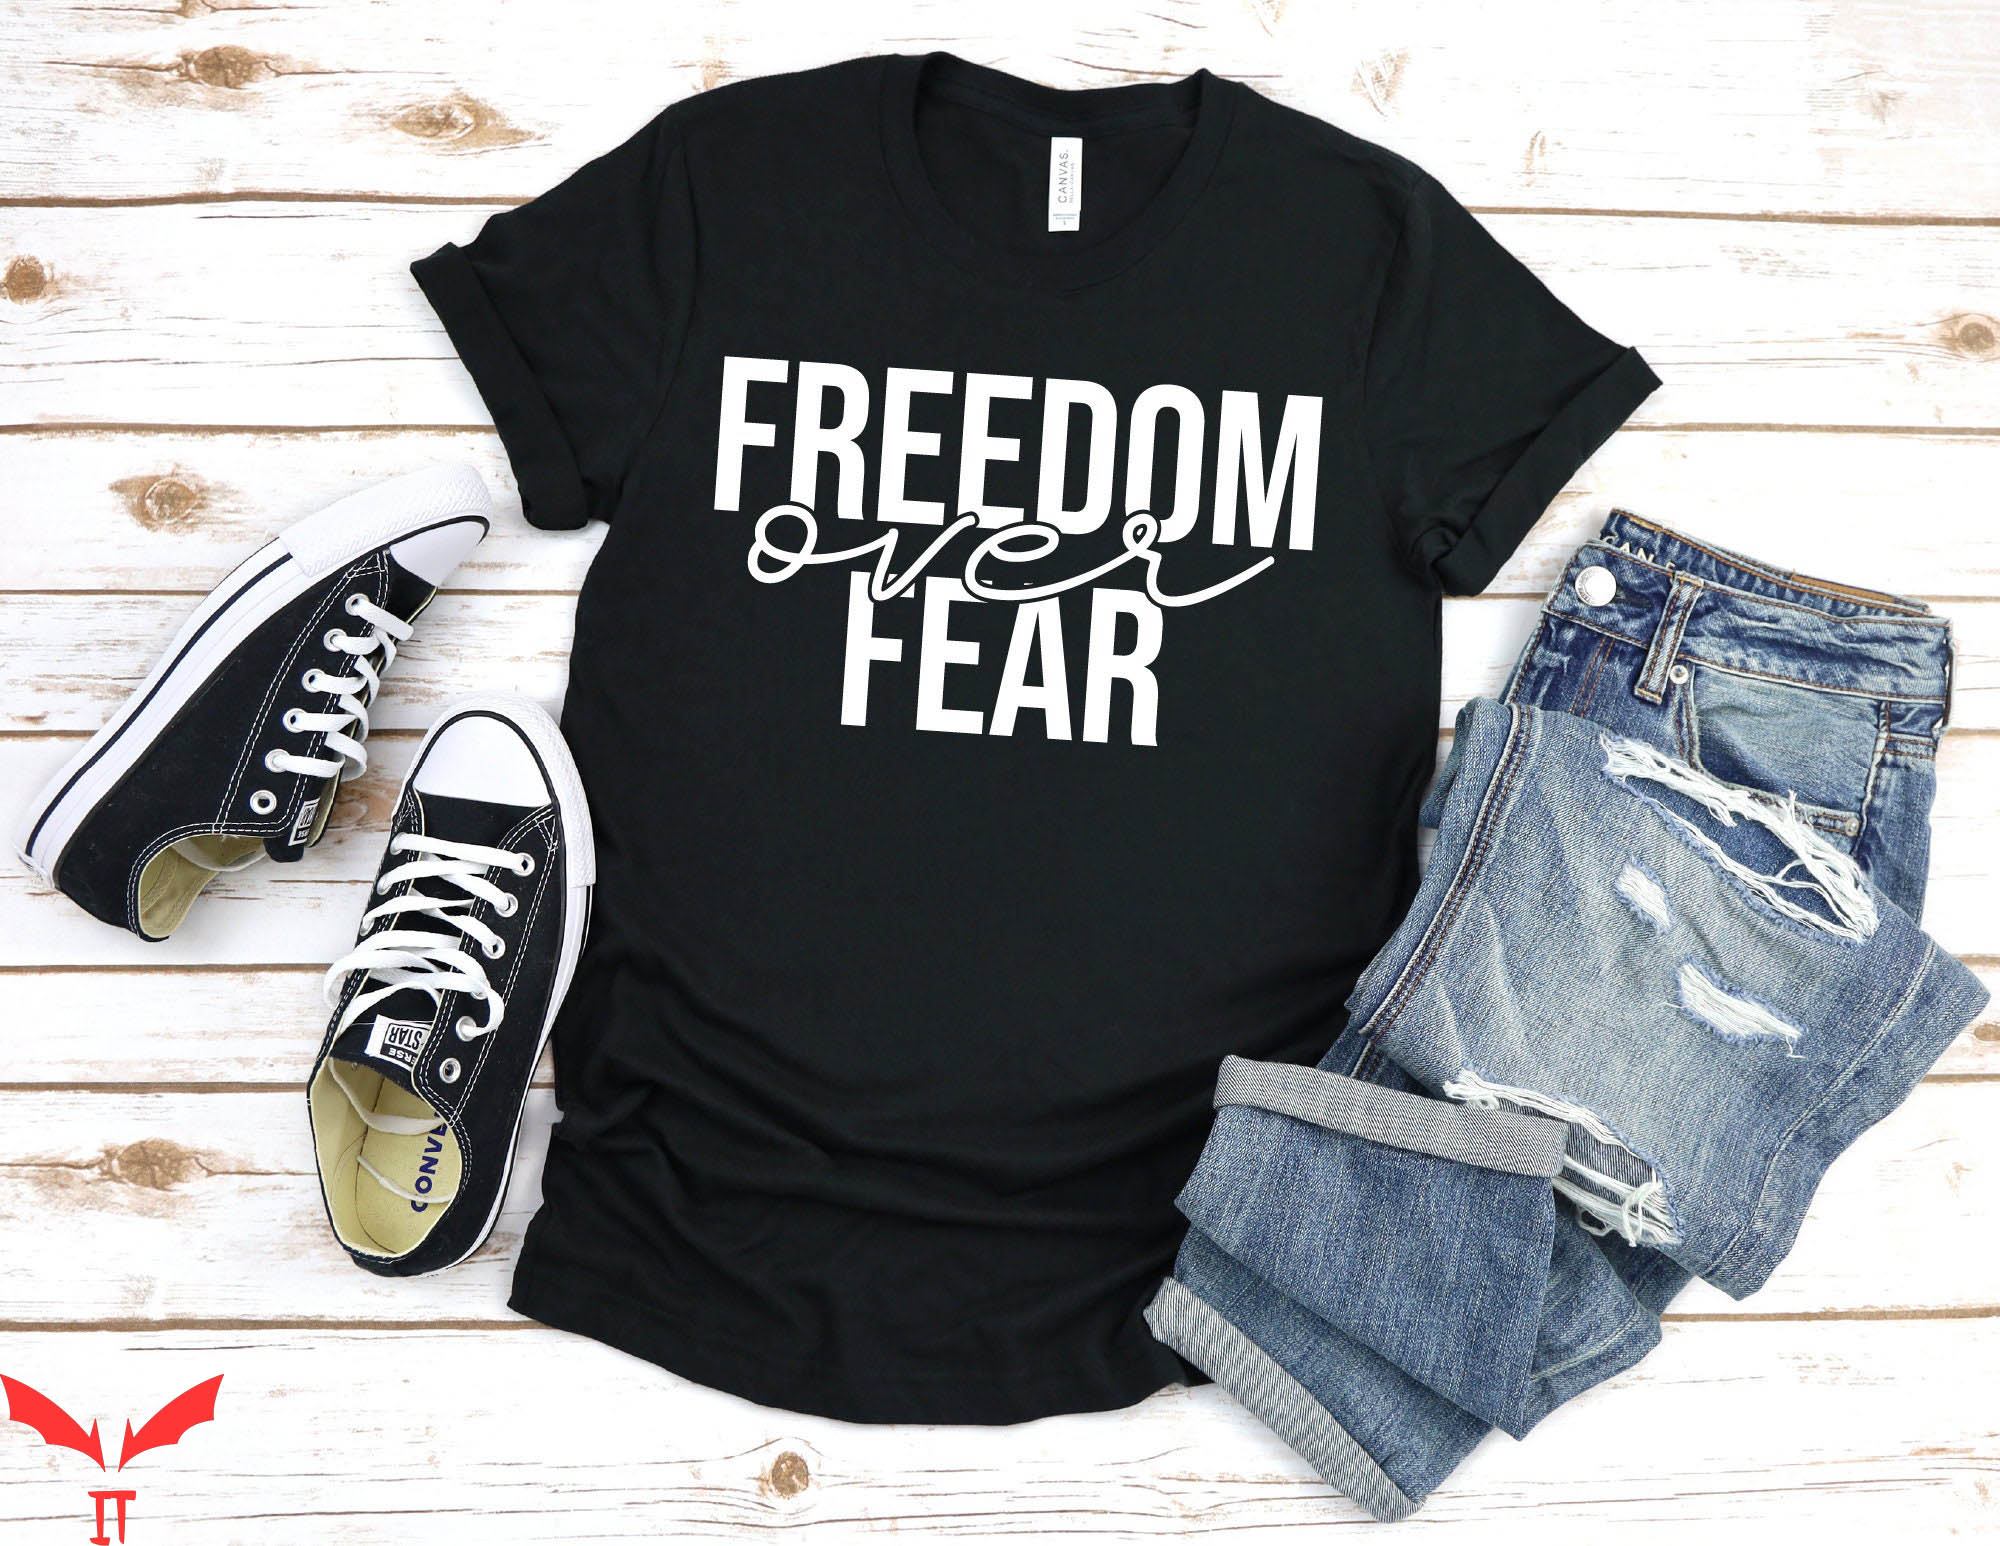 Freedom Over Fear T-Shirt Motivational American Veteran Tee